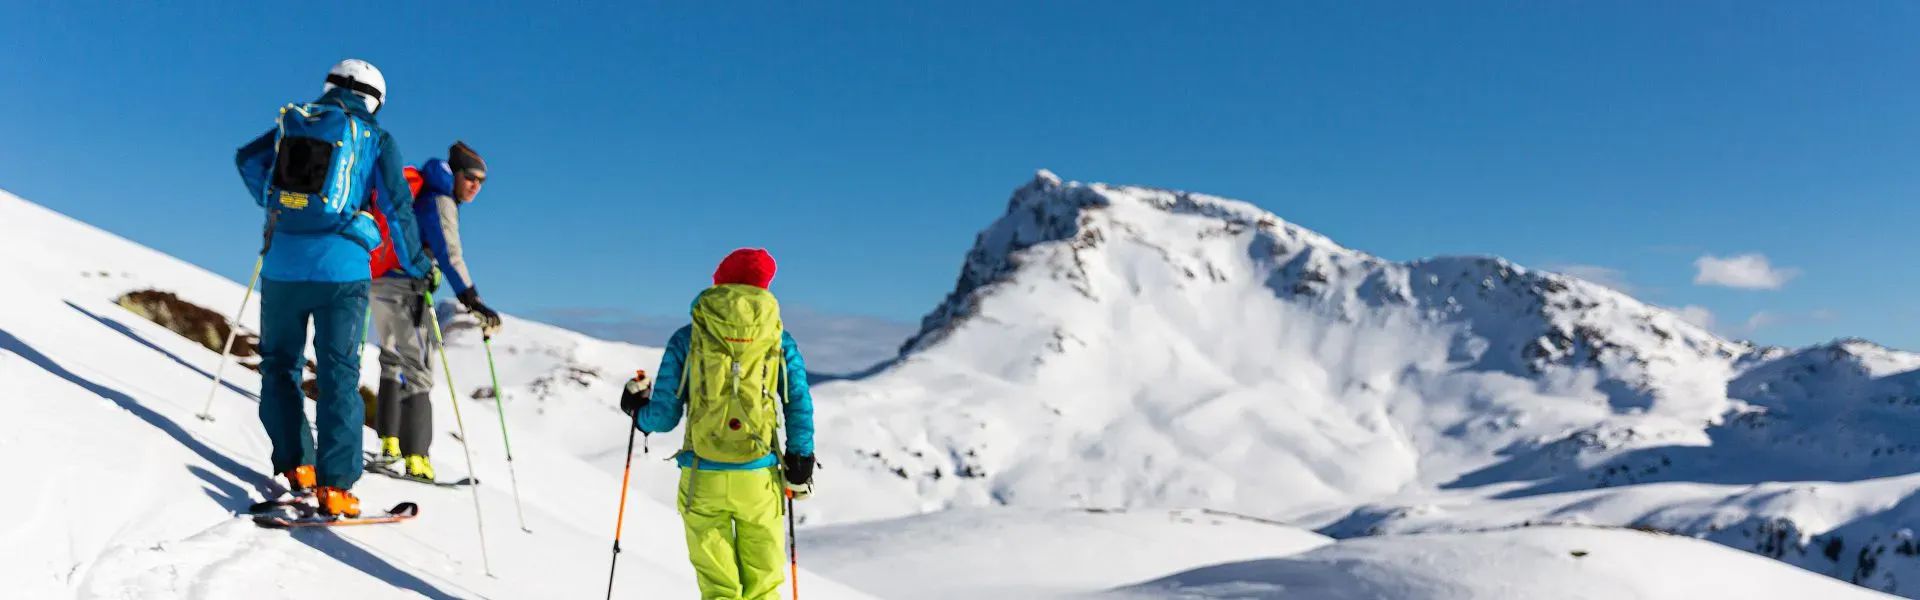 Kitzbueheler Alpen KAT Skitour Winter @Valentin Widmesser (52)